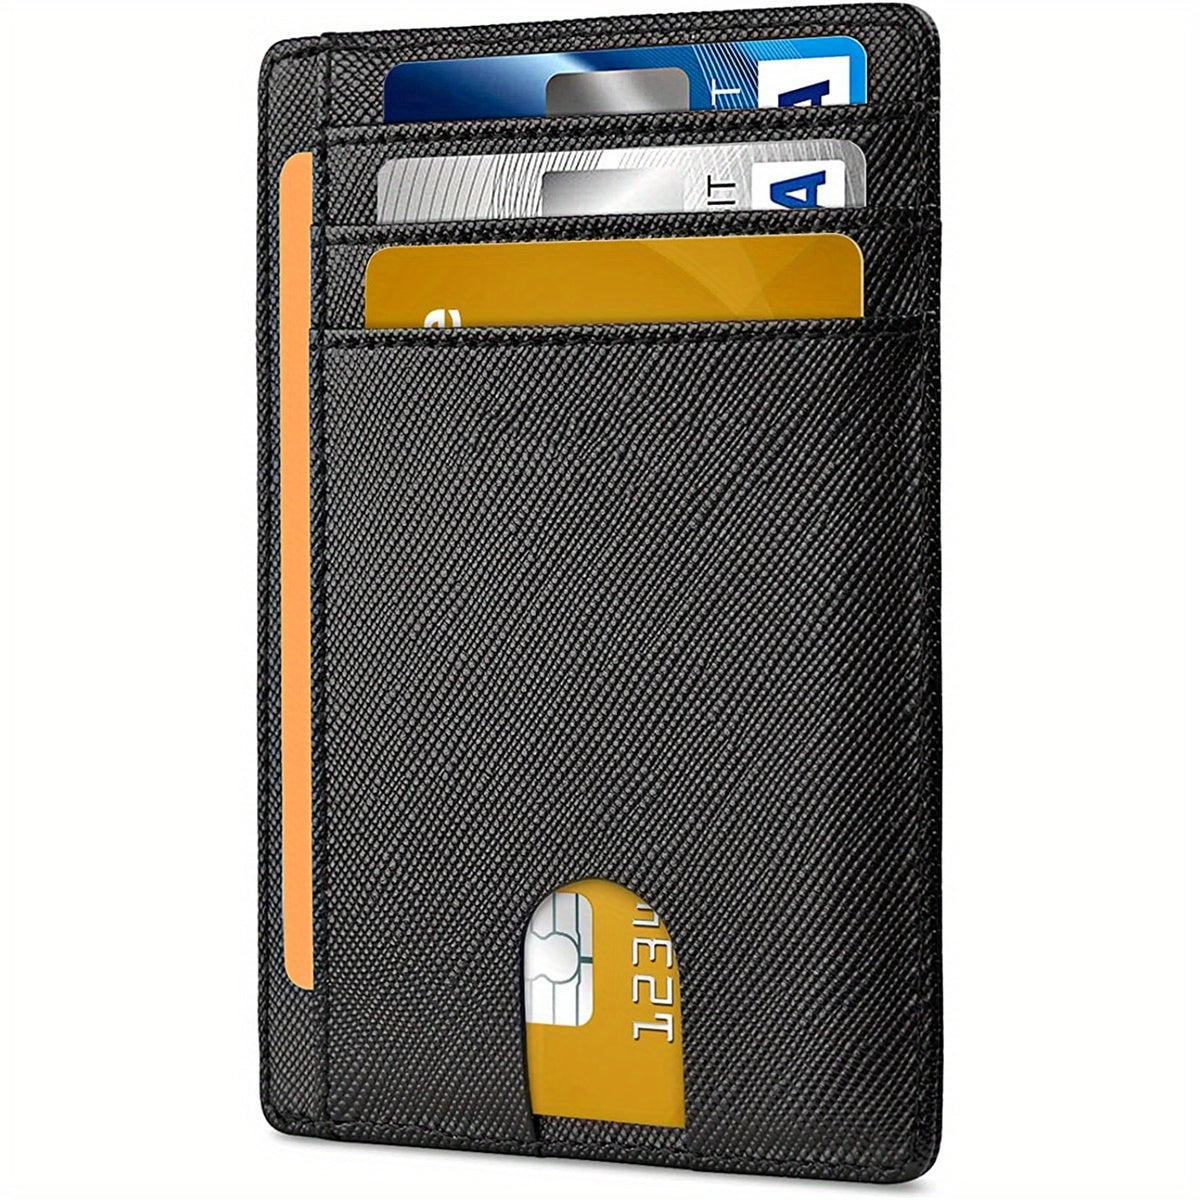 Slim Minimalist Pocket Wallet Genuine Leather RFID Blocking Credit Card Holder For Work Travel